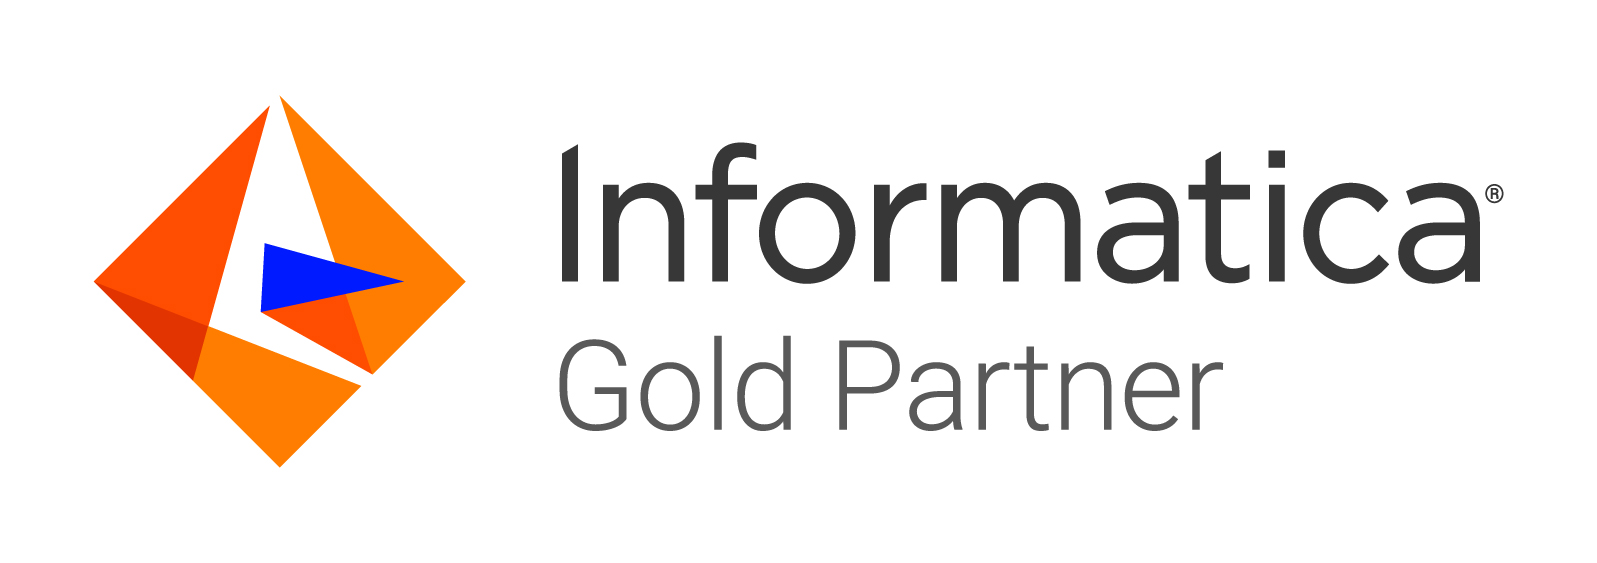 Informatica Gold Partner logo